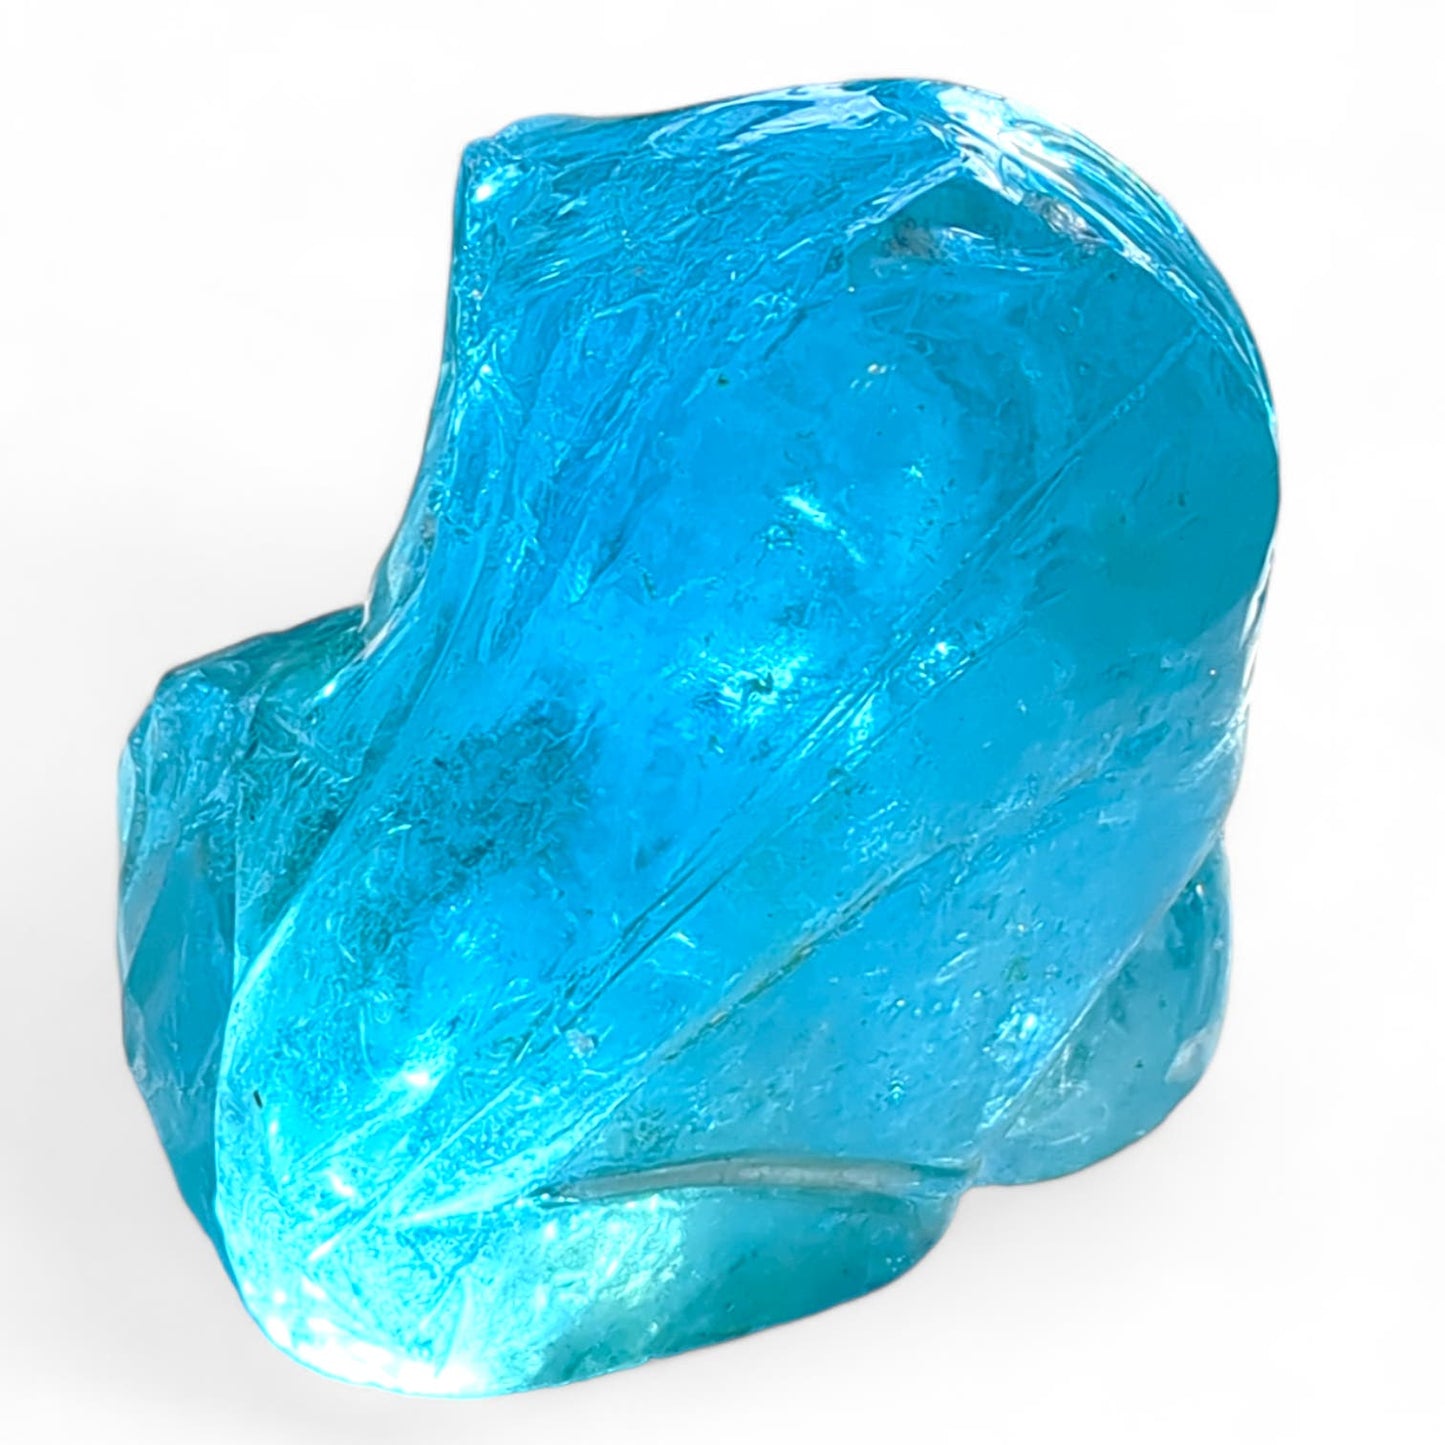 Sapphire Blue Art Glass Cullet Glowing Translucent Manganese Slag #4GX103